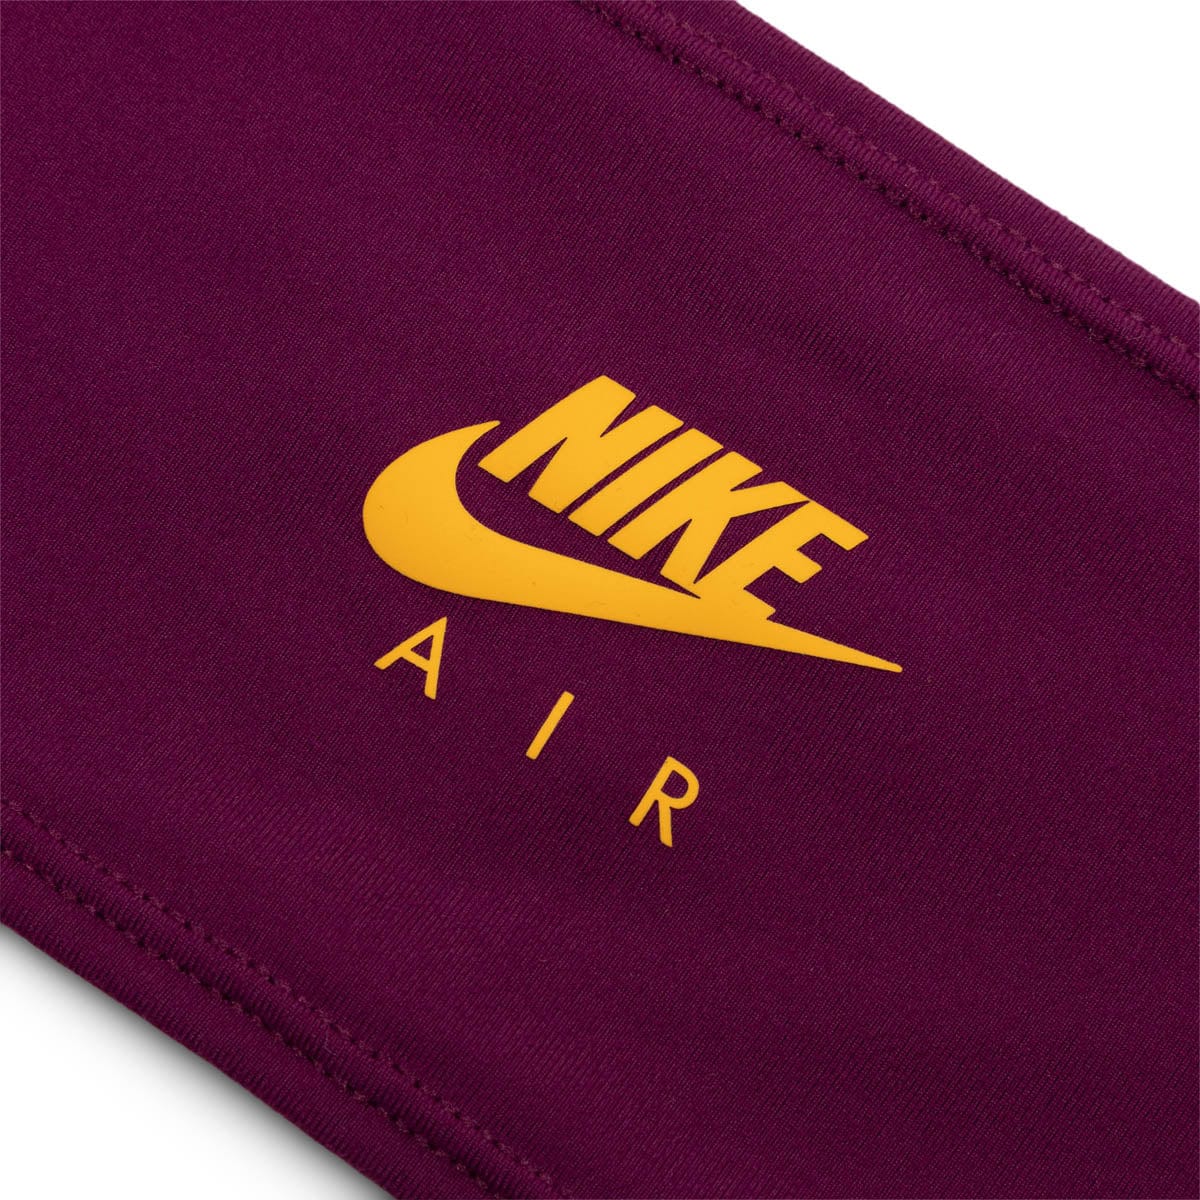 Nike Headwear SANGRIA/UNIVERSITY GOLD [646] / O/S DRI-FIT SWOOSH HEADBAND 2.0 AIR